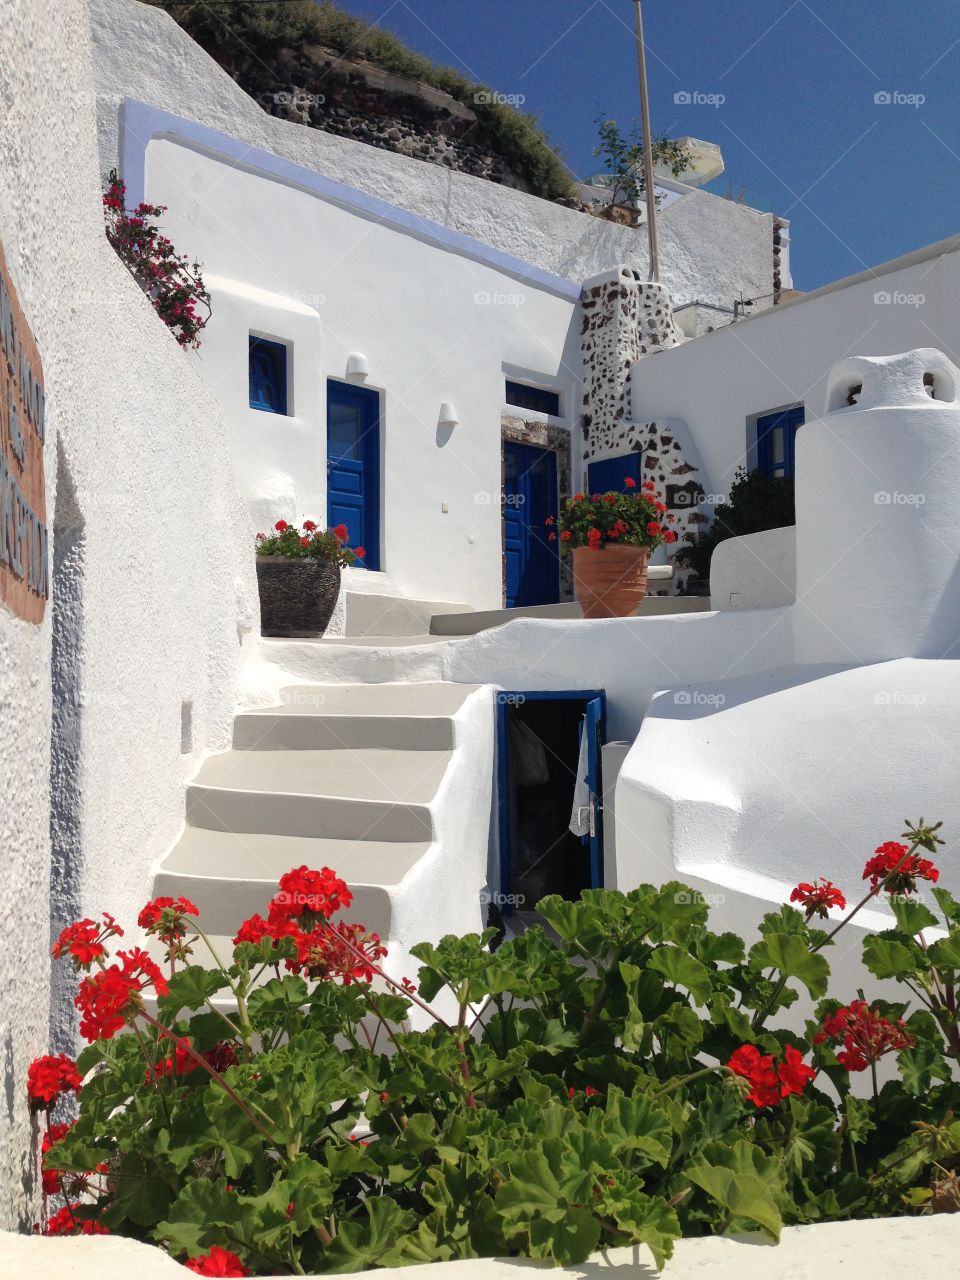 santorini greece. Summer vacation to Greece 2015